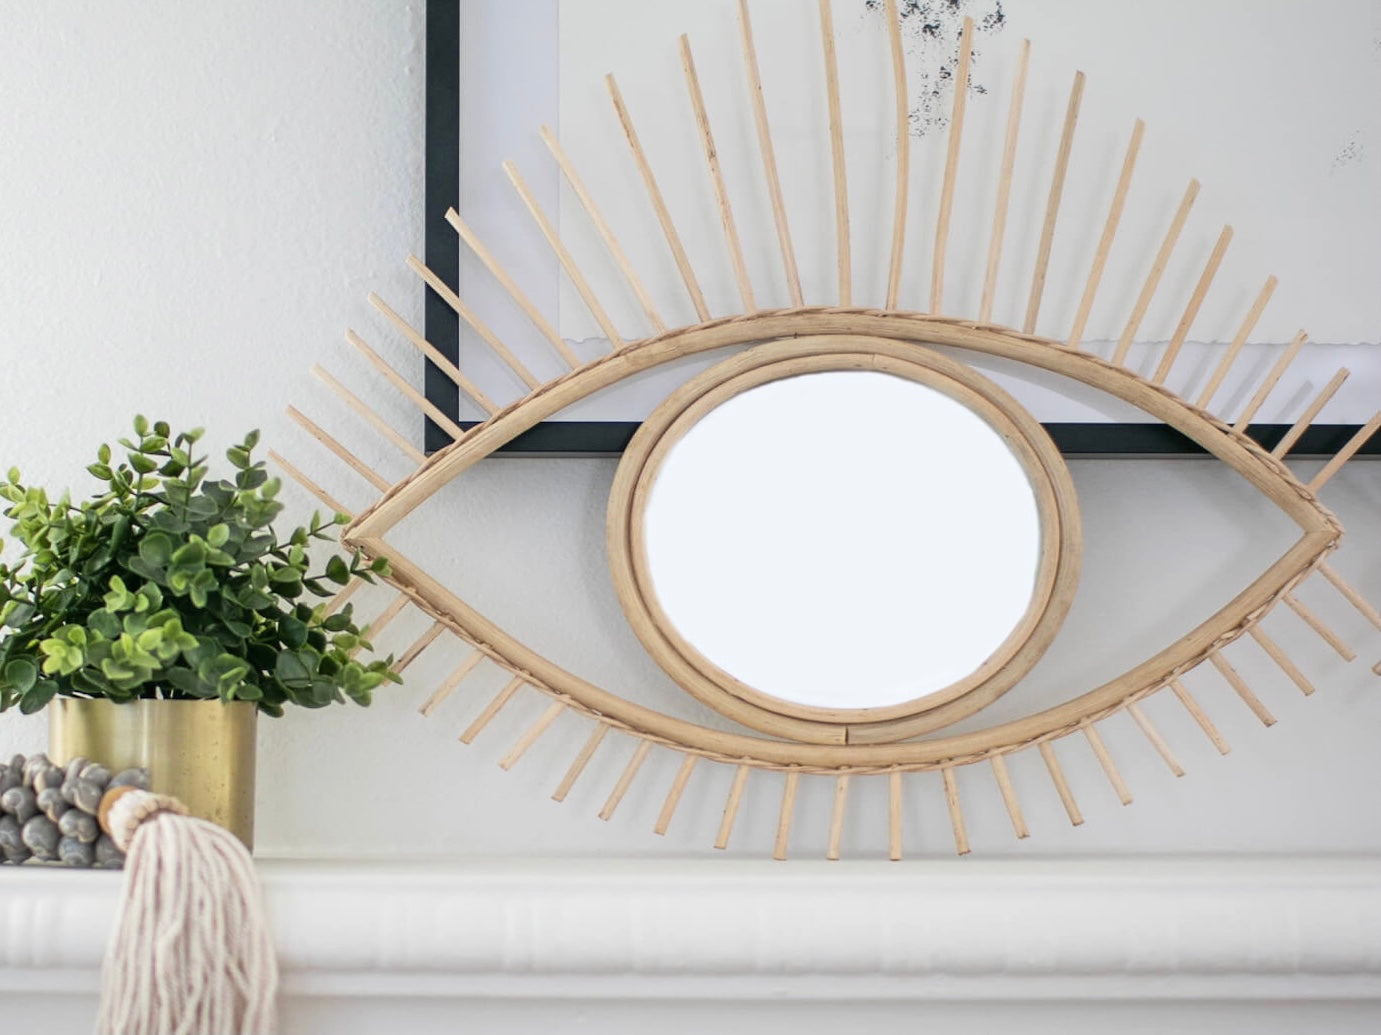 handmade rattan open eye mirror on mantel next to plant and boho decor